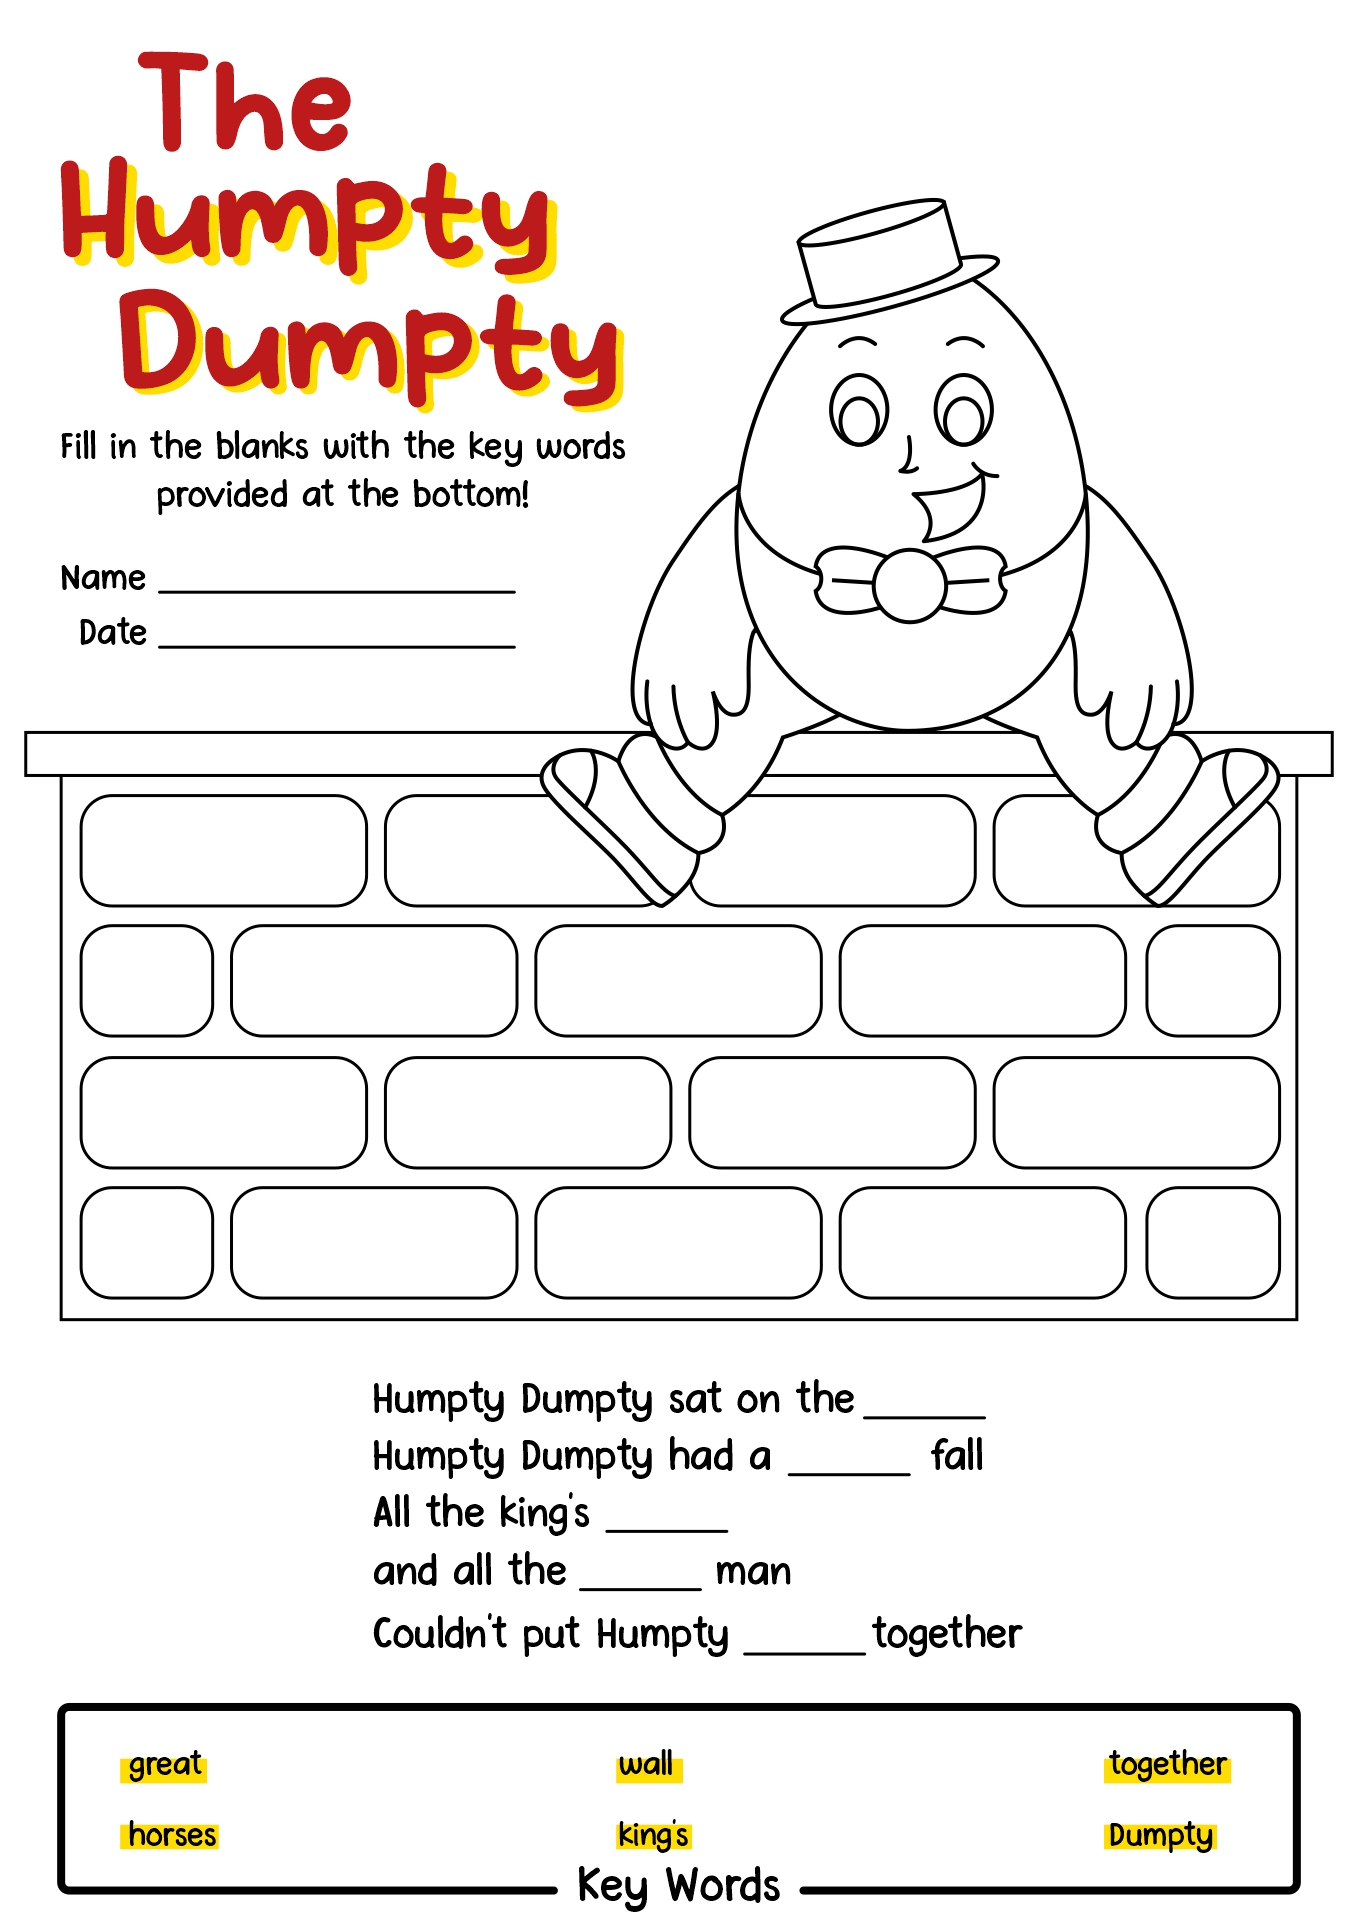 14 Best Images of Worksheets Humpty Dumpty Preschool Crafts Humpty